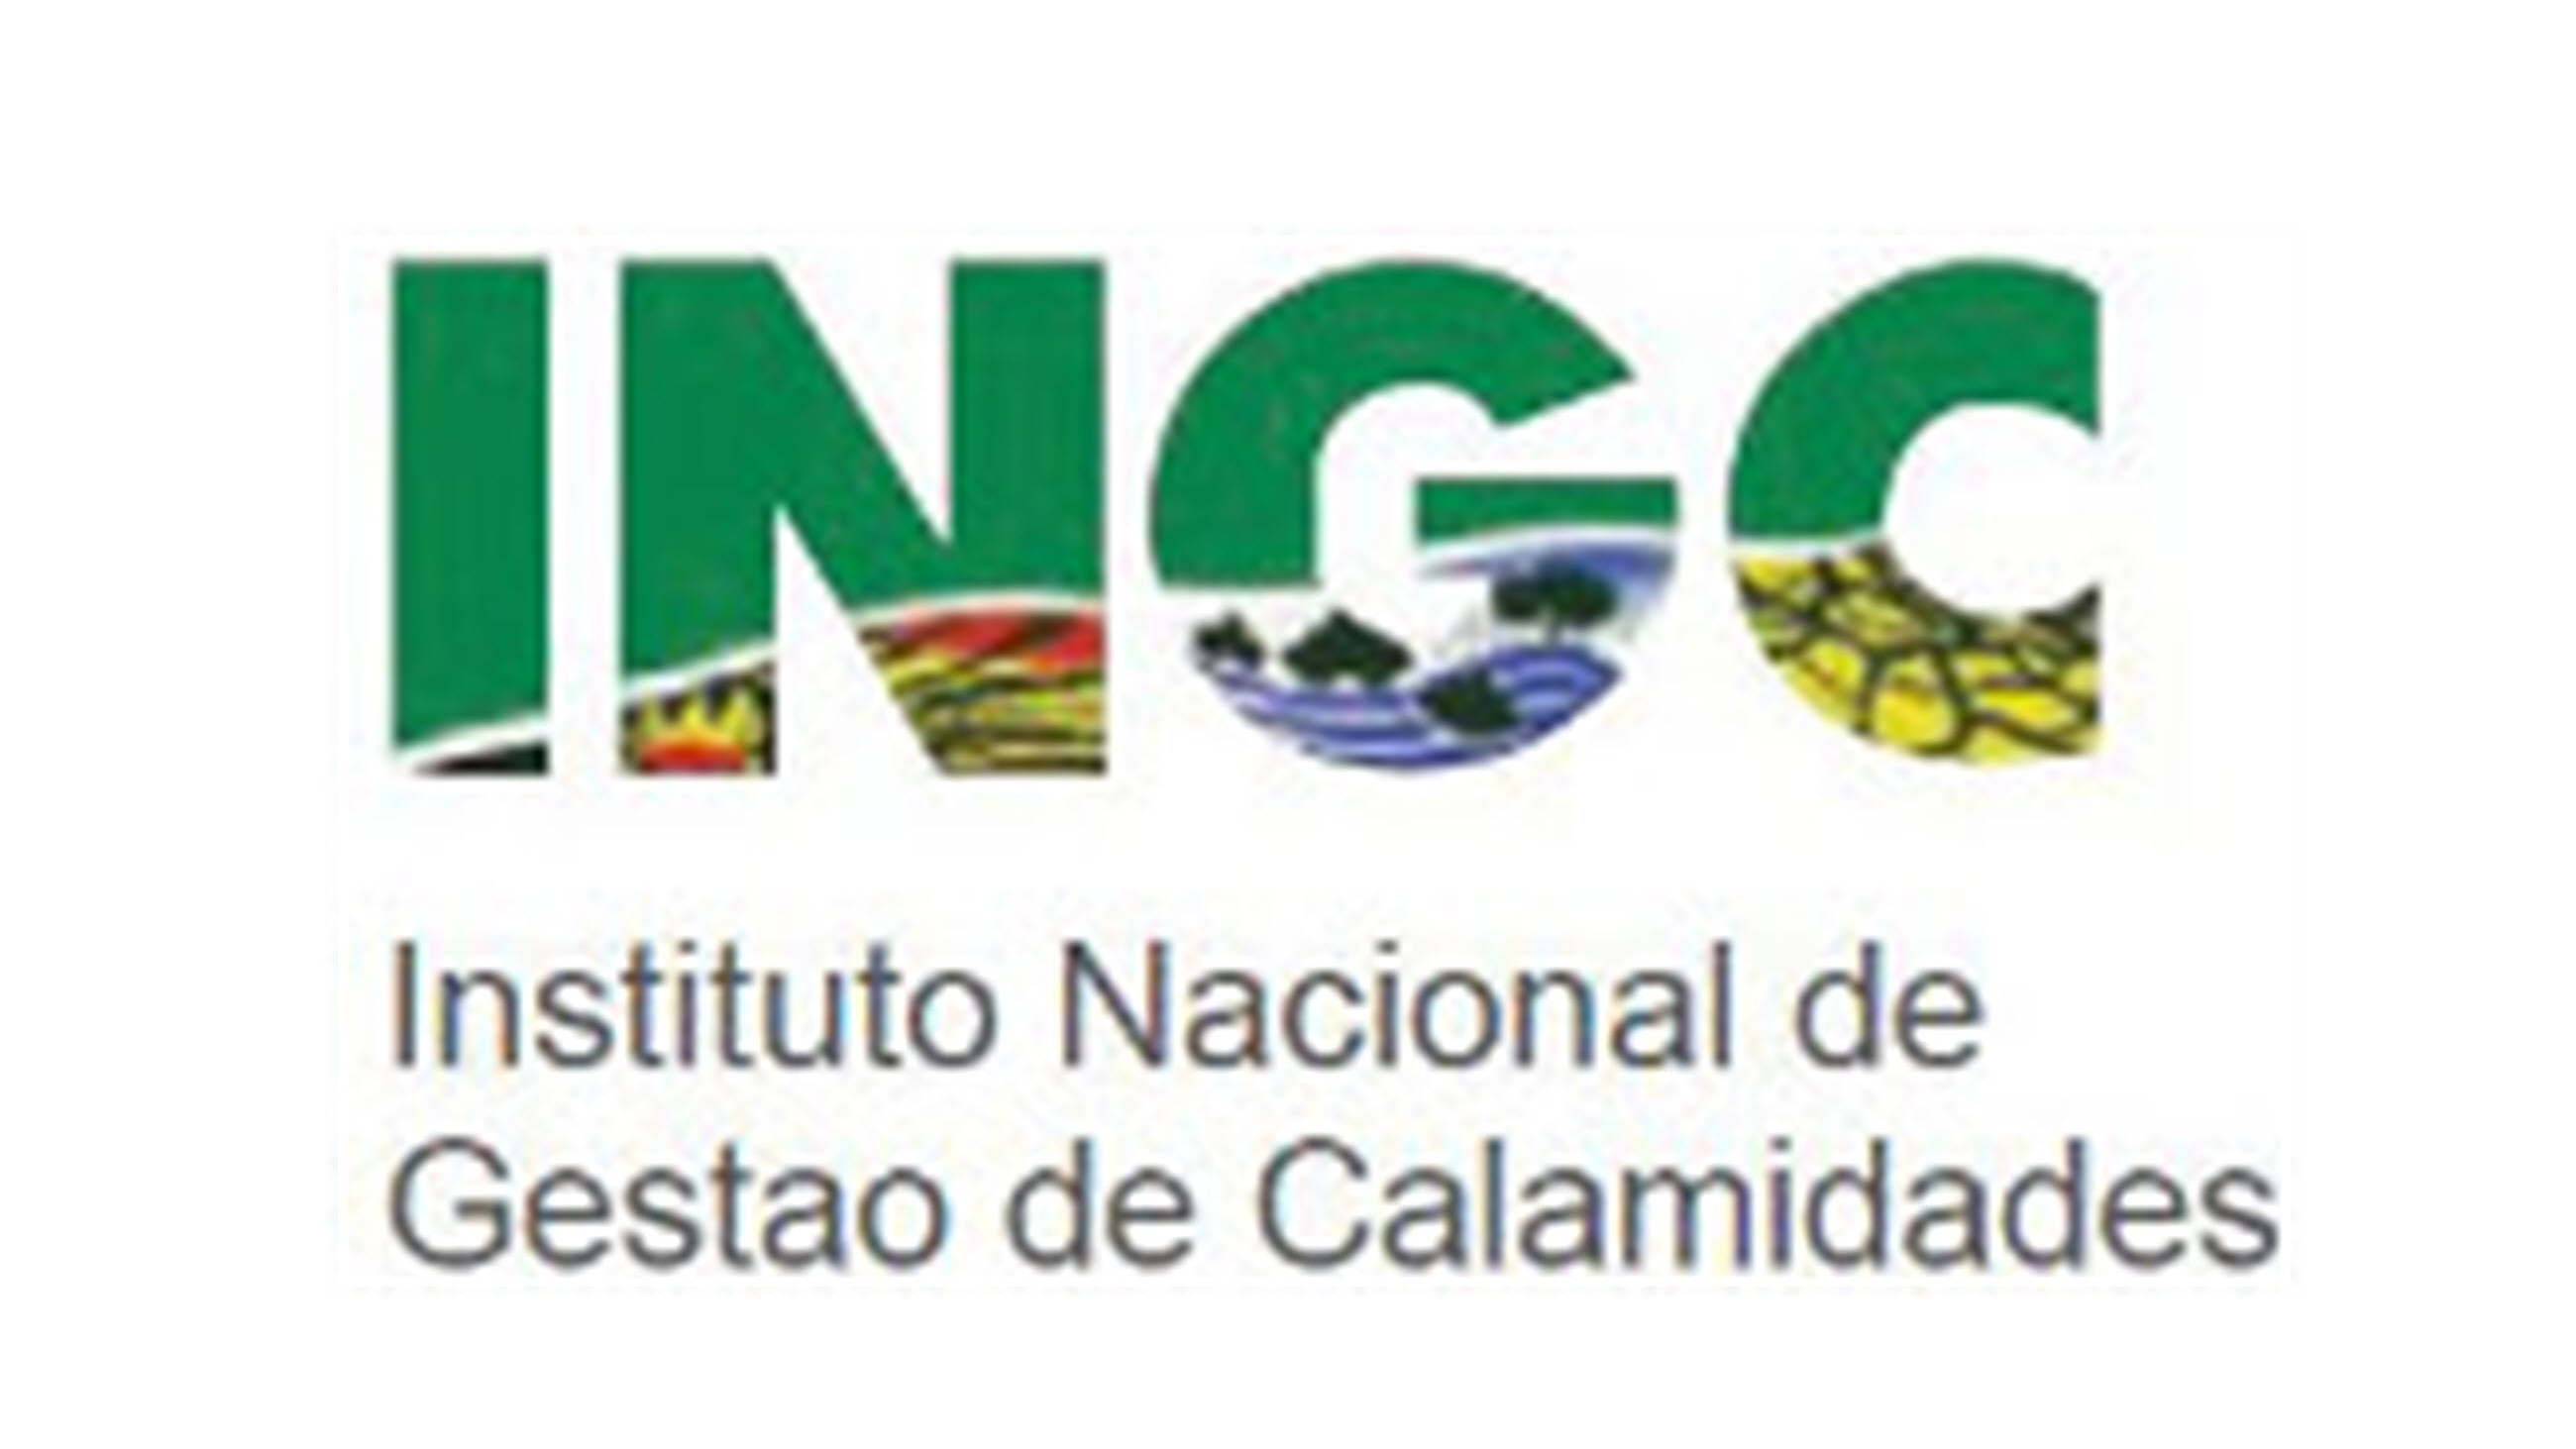 link to Instituto Nacional de Gestao de Calamidades